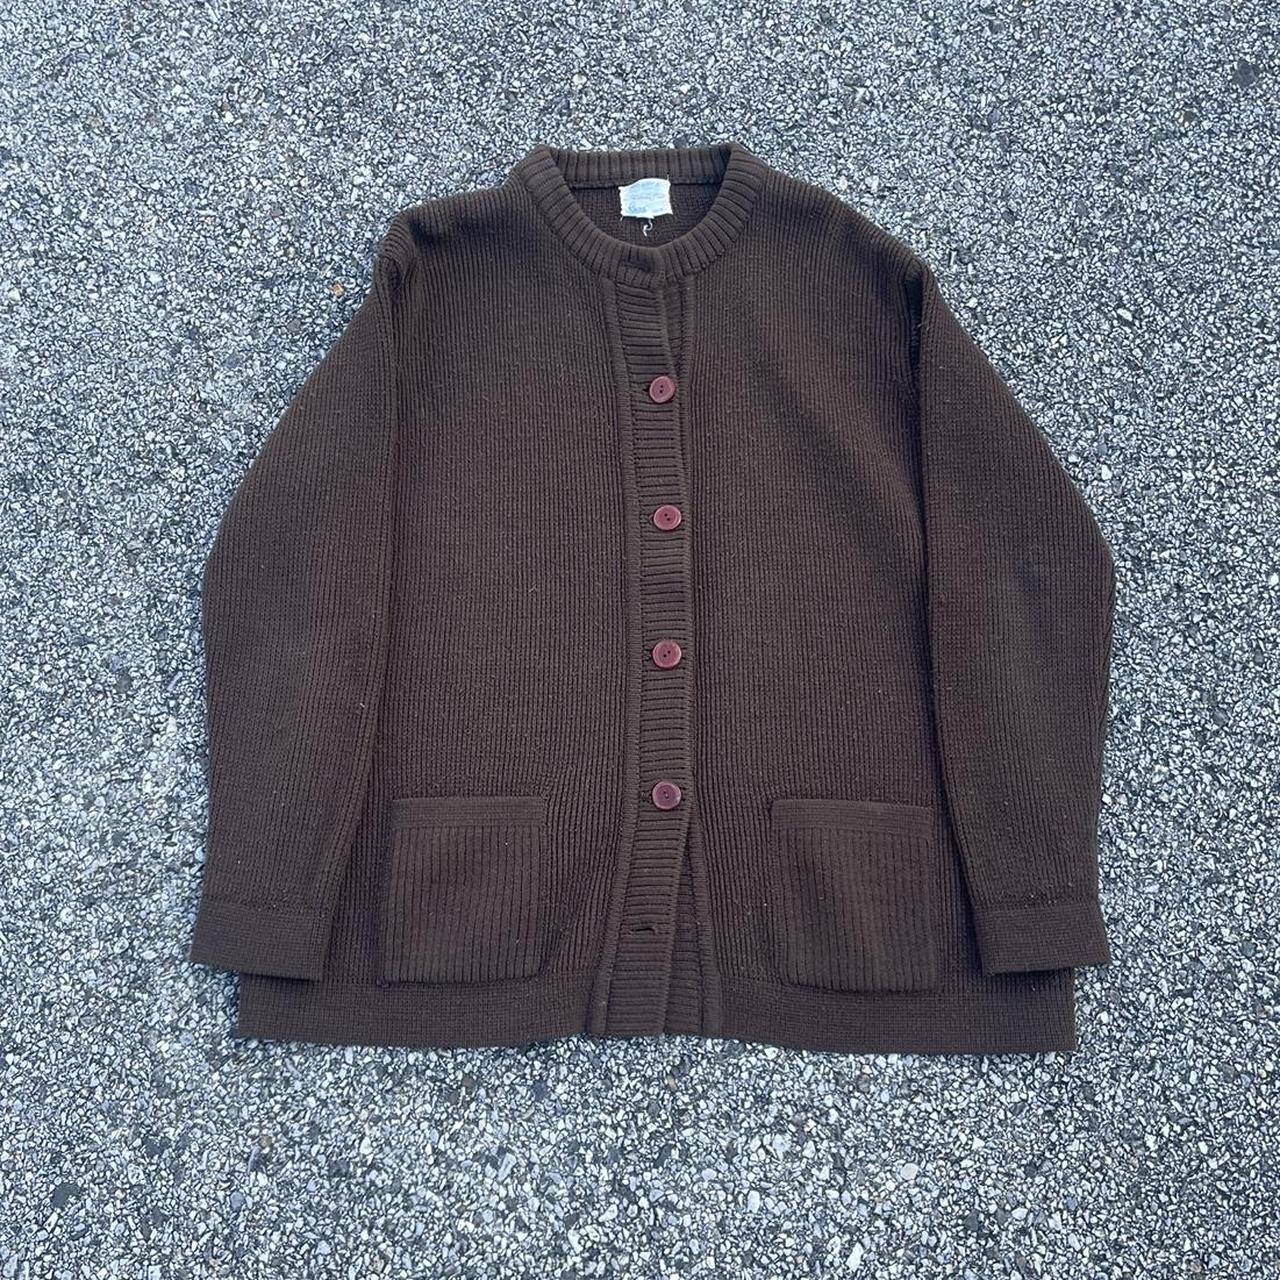 True Vintage 1960s Sears Cardigan Sweater Fits a... - Depop